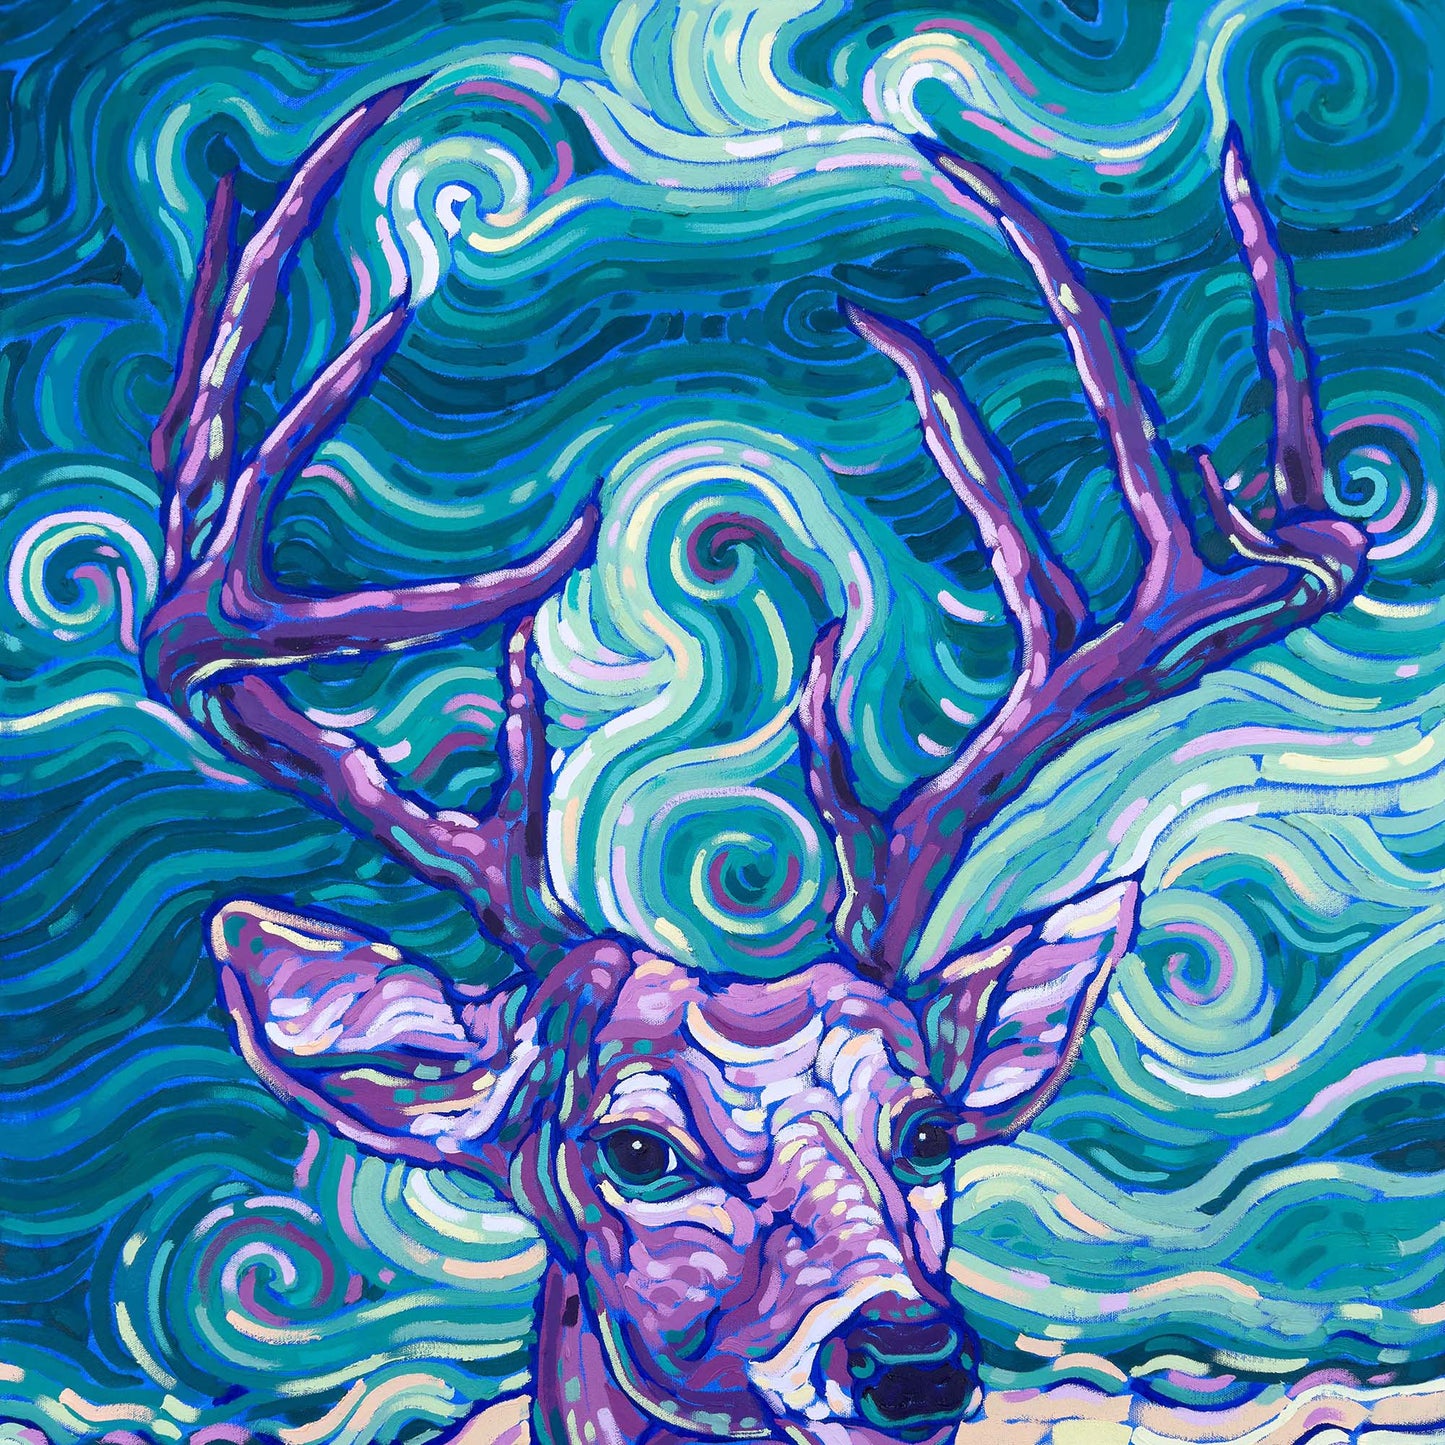 Texas Whitetail Deer No. 1 - 30x40